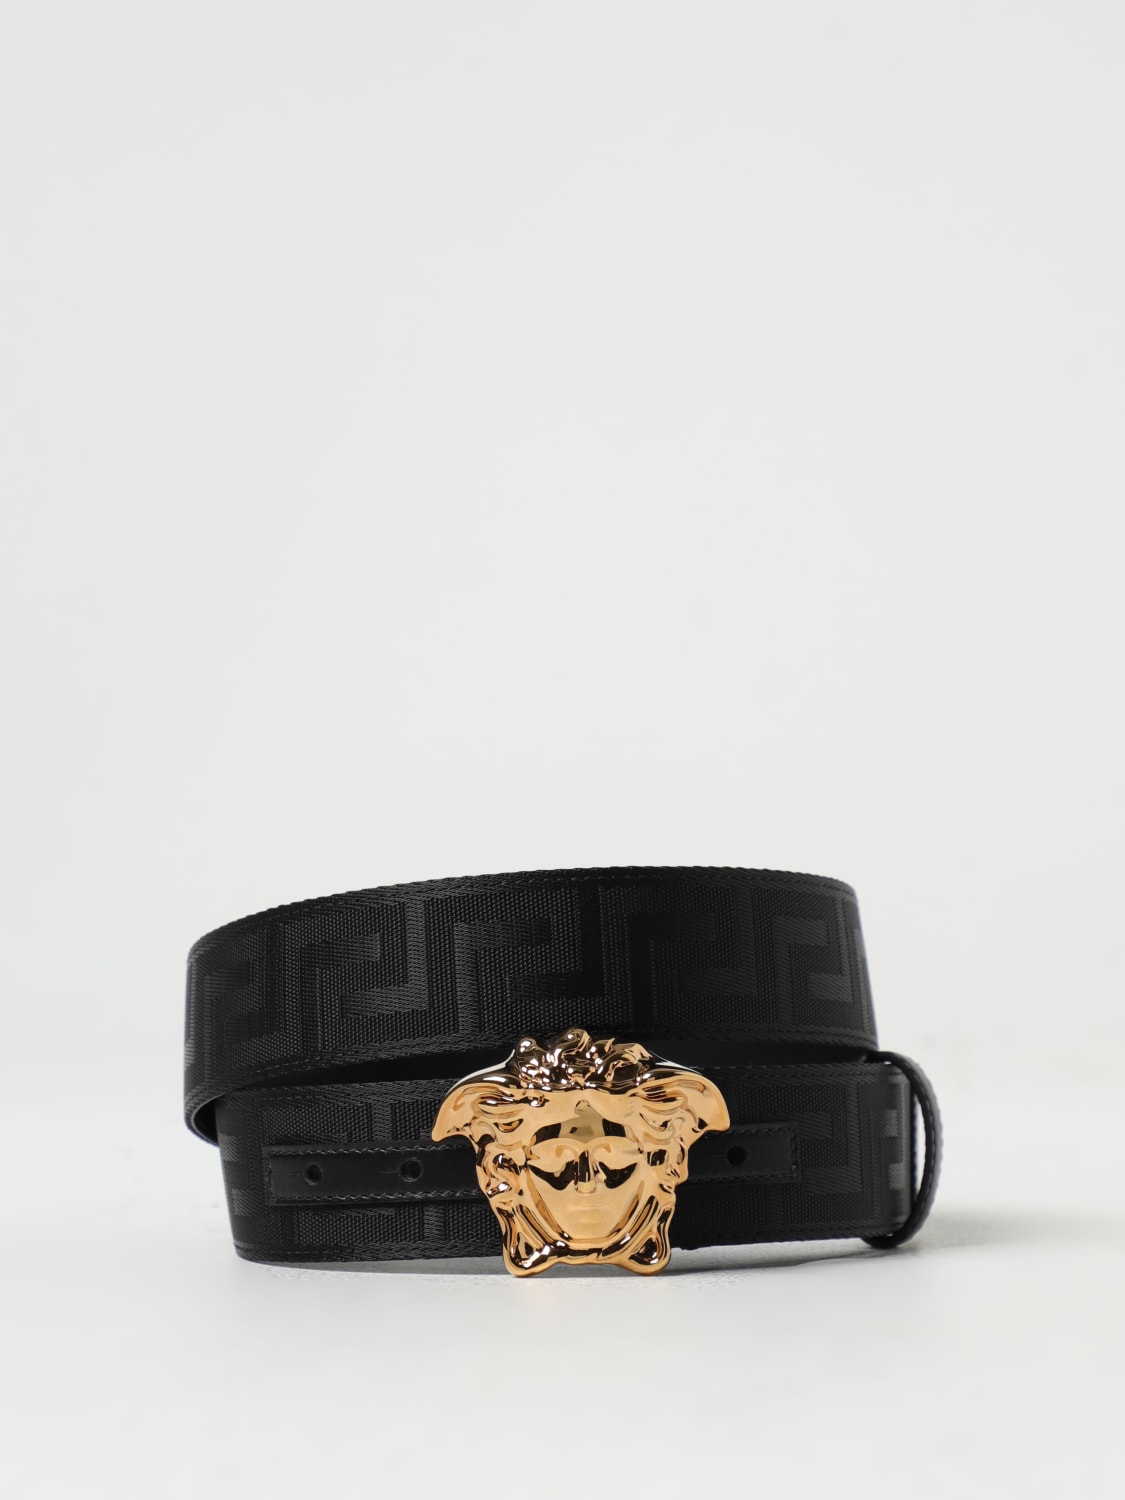 Versace Men's La Medusa Leather Belt - Black - Belts